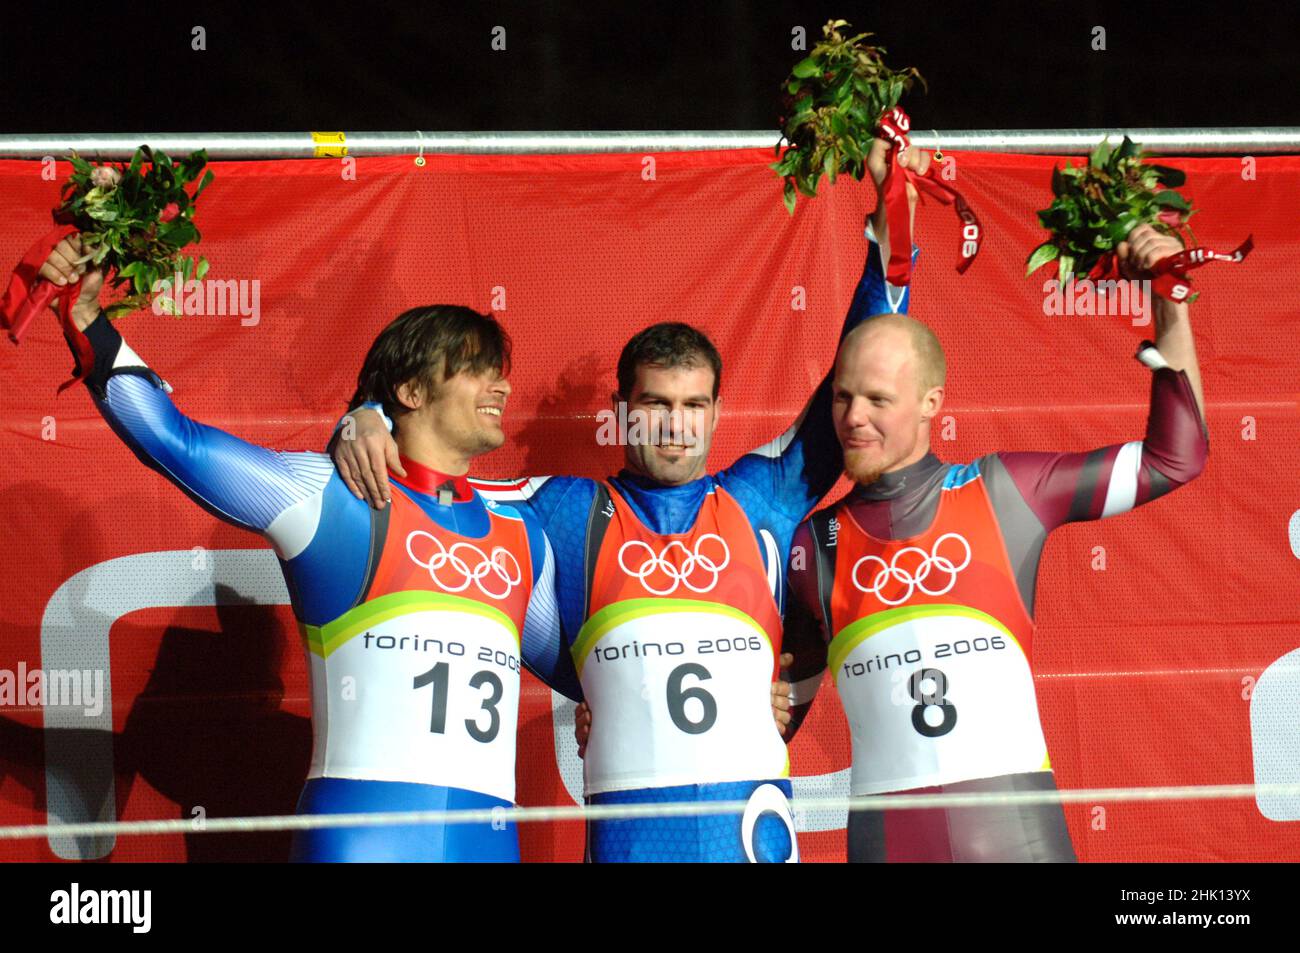 Cesana San Sicario, Turin Italien 2006-02-12: Olympische Winterspiele 2006 in Turin, Preisverleihung des Rennrodeln-Wettbewerbs, Demtschenko Albert (Rus), Zoeggeler Amin (Ita), Rubenis Martins (Lat) Stockfoto